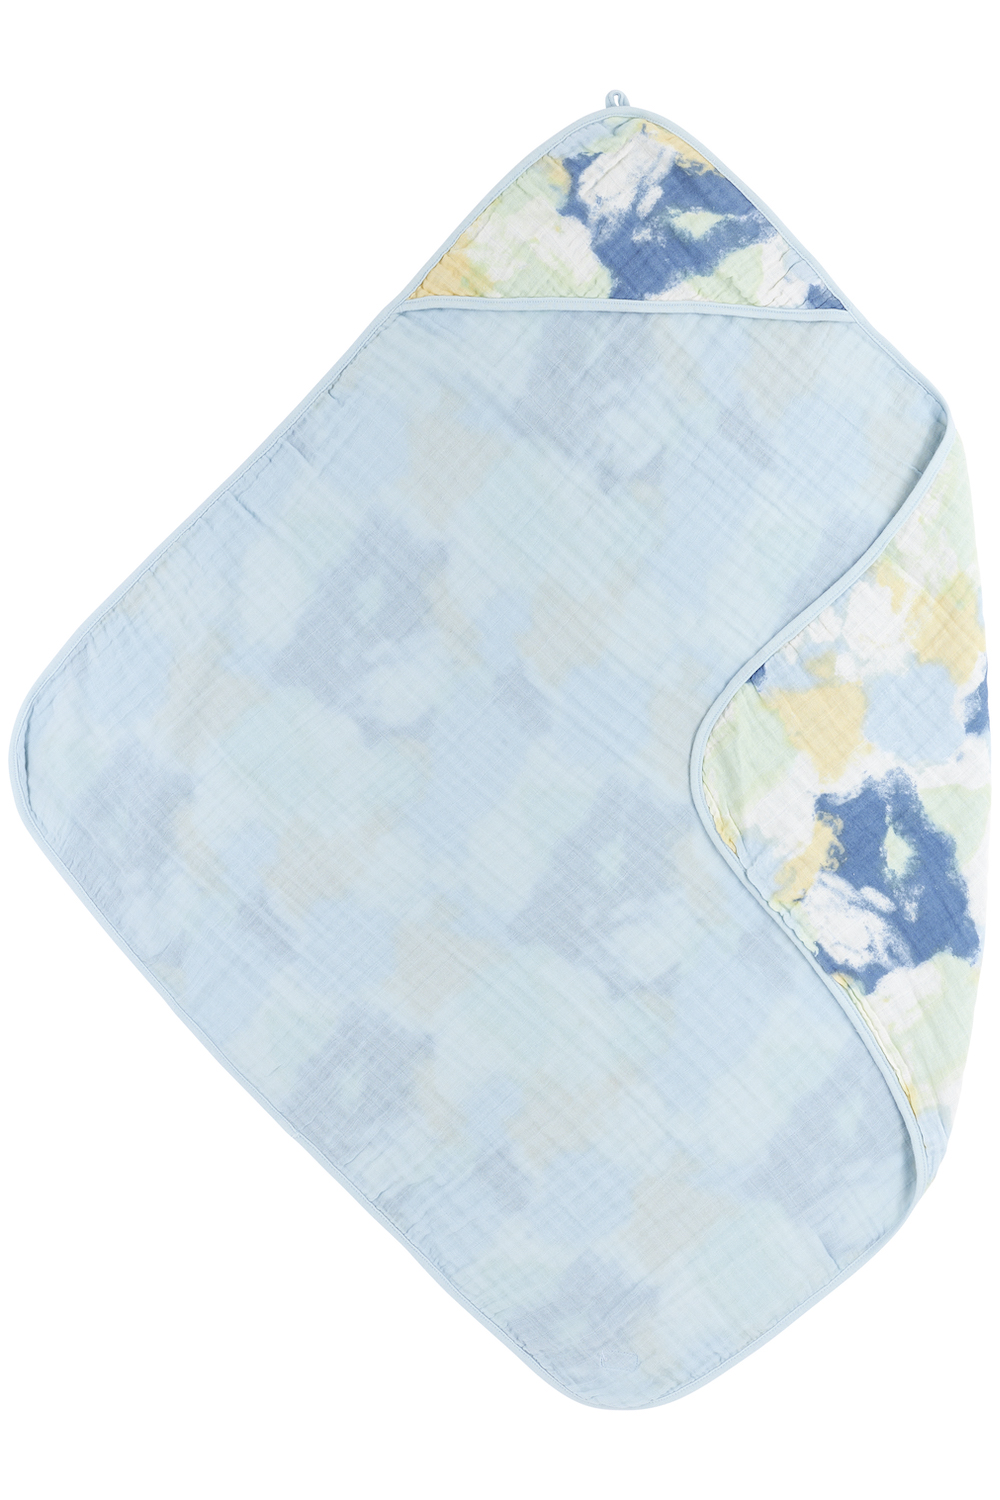 Bathcape pre-washed muslin Tie-Dye - light blue - 80x80cm